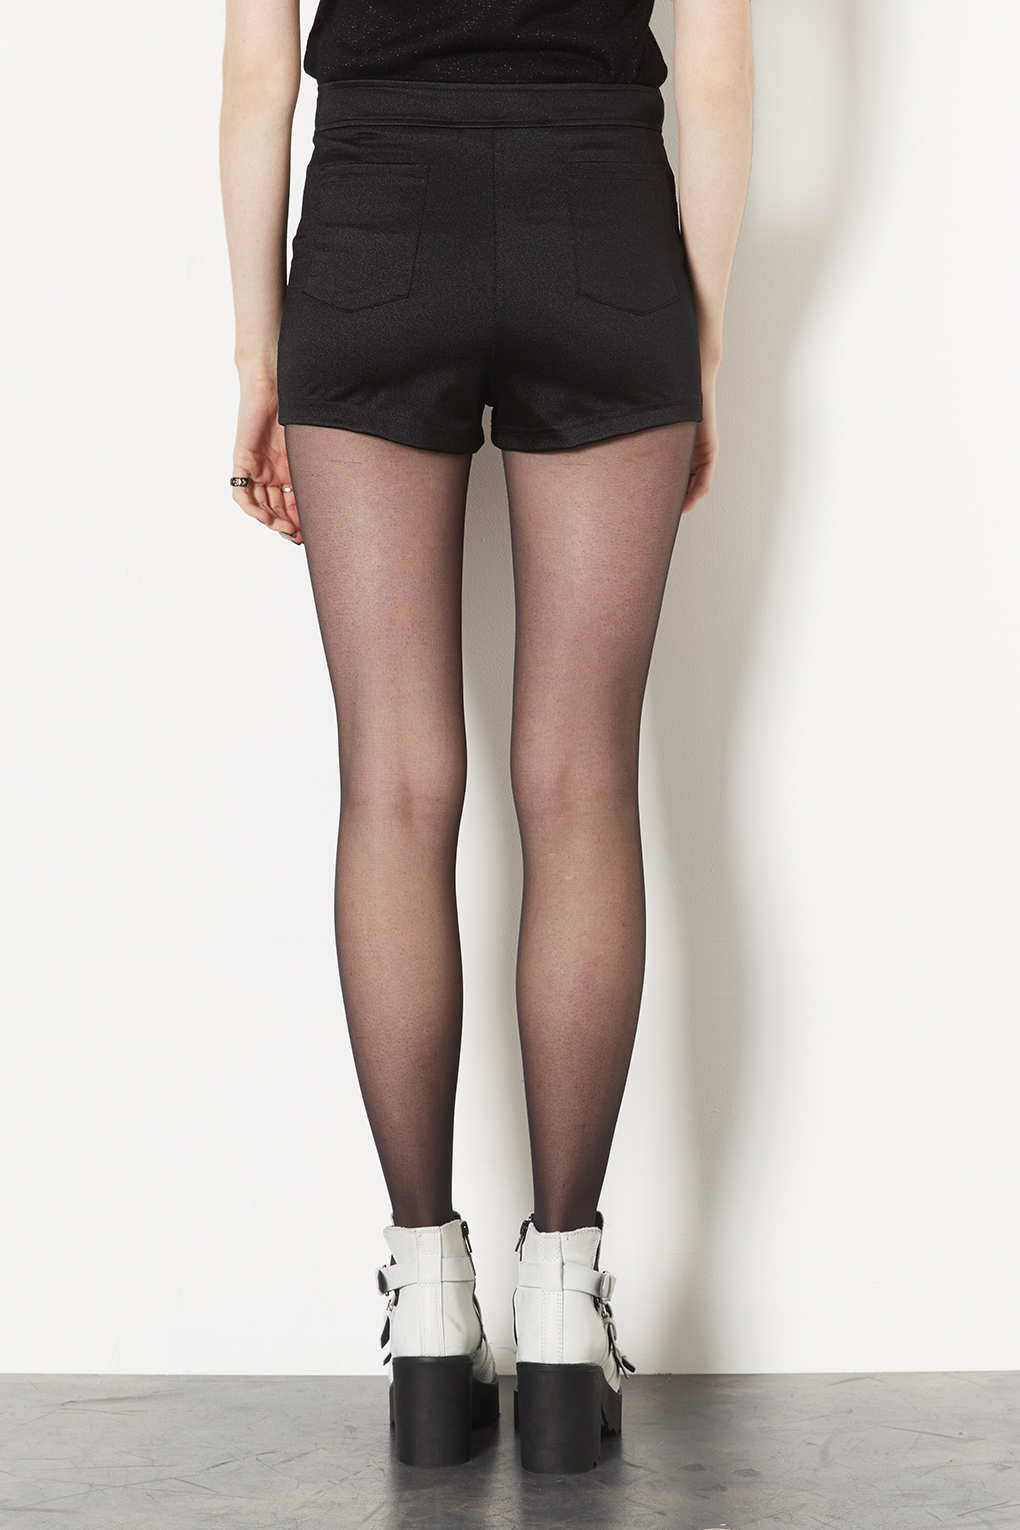 Topshop Petite Shiny High Waist Shorts in Black | Lyst